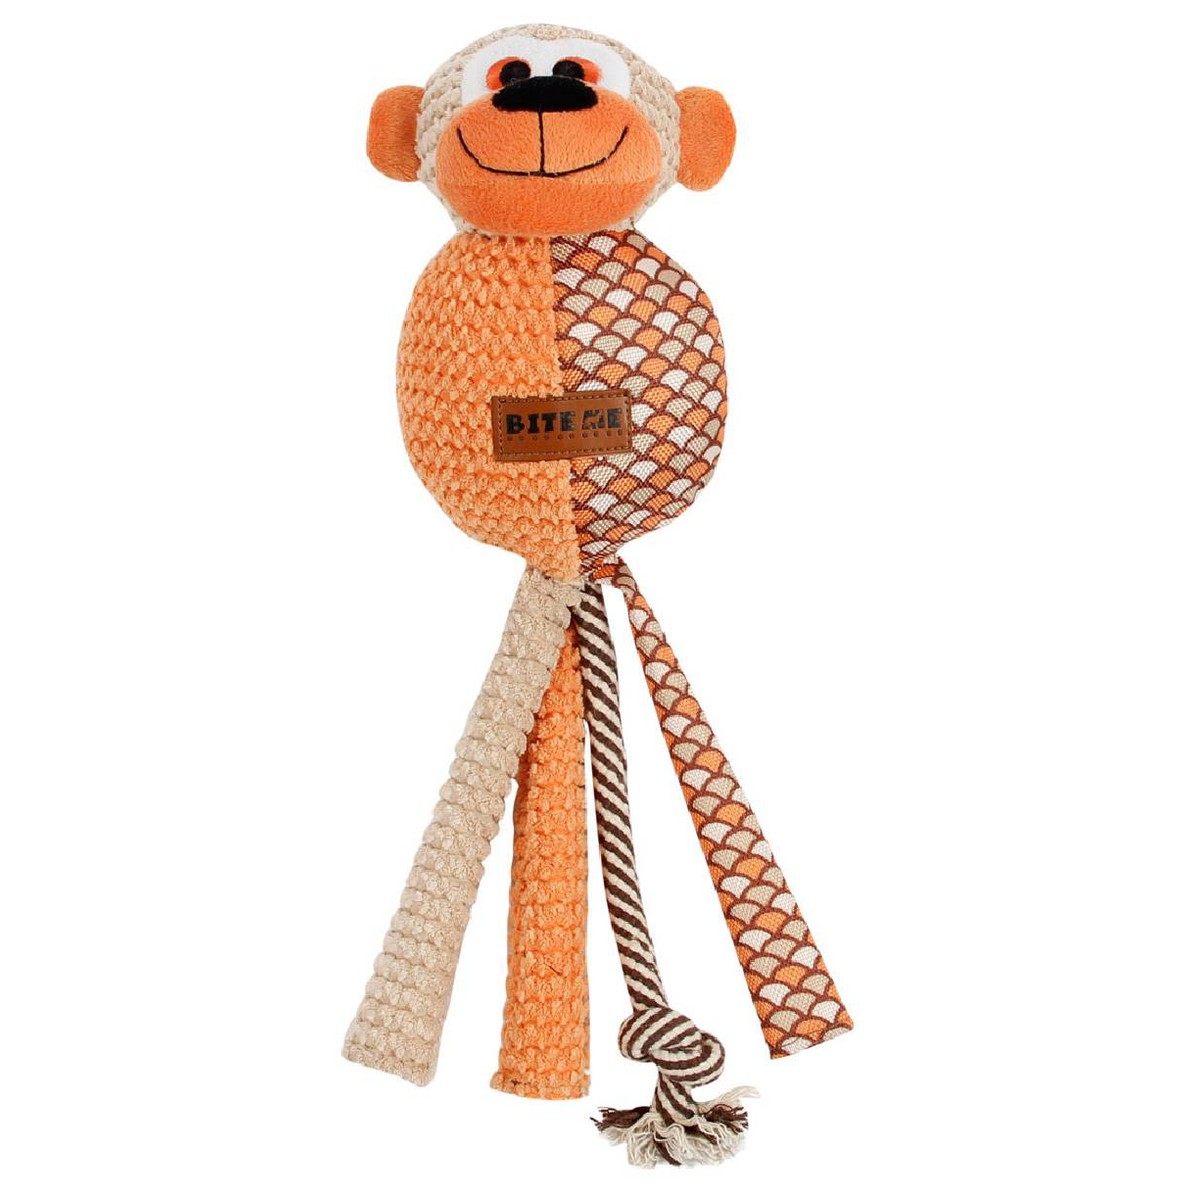   Jouet Funky Monkey brun/orange, 14 x 14 cm  14x14cm